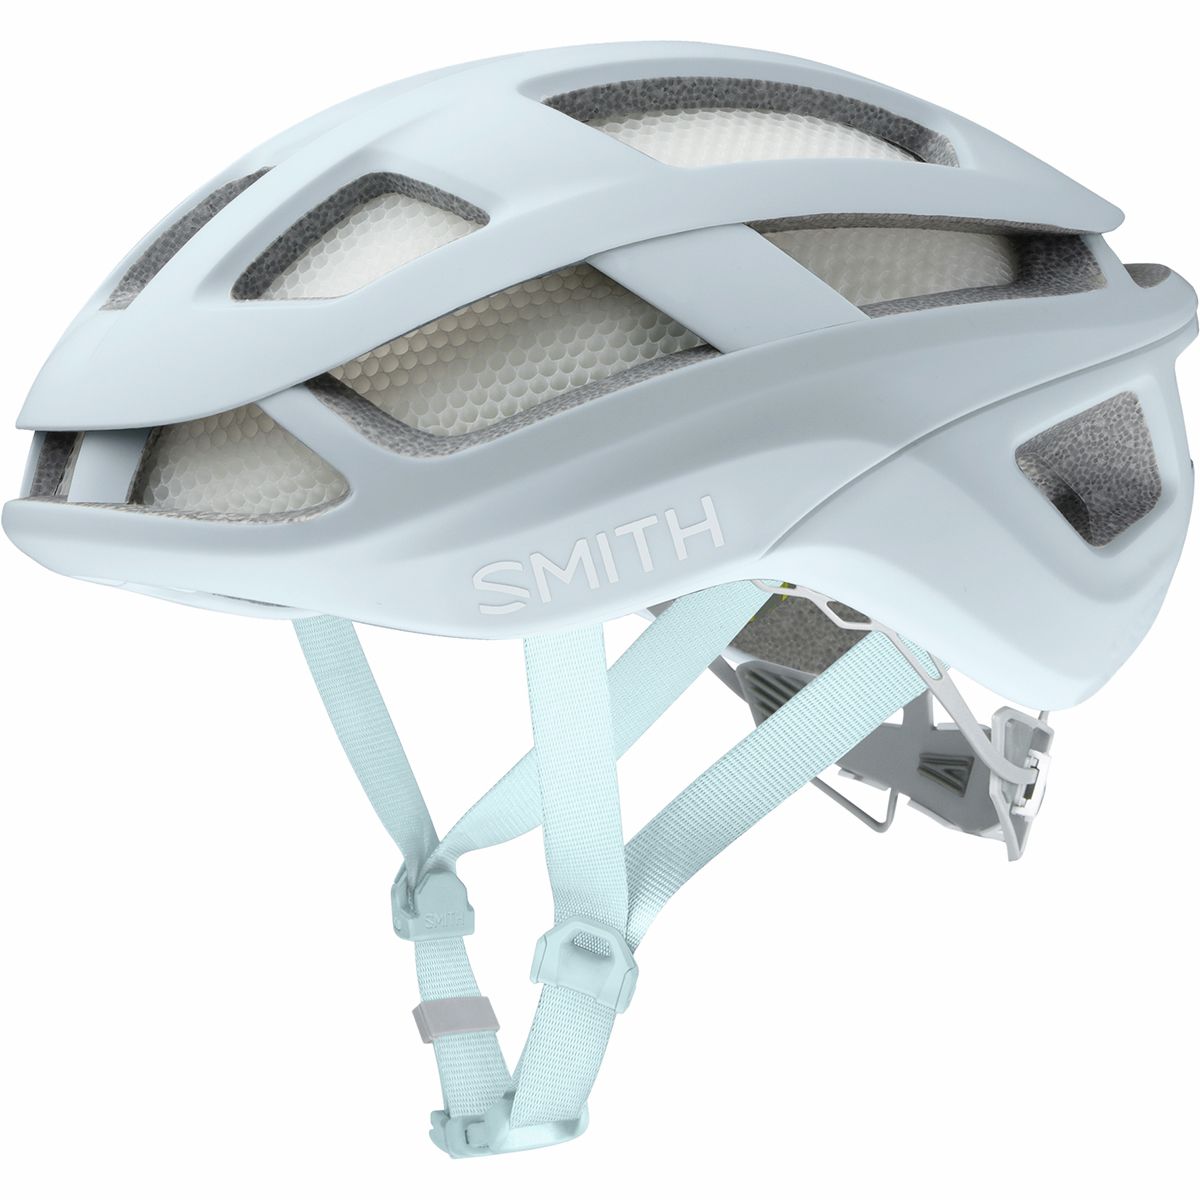 Smith Trace MIPS Helmet | eBay